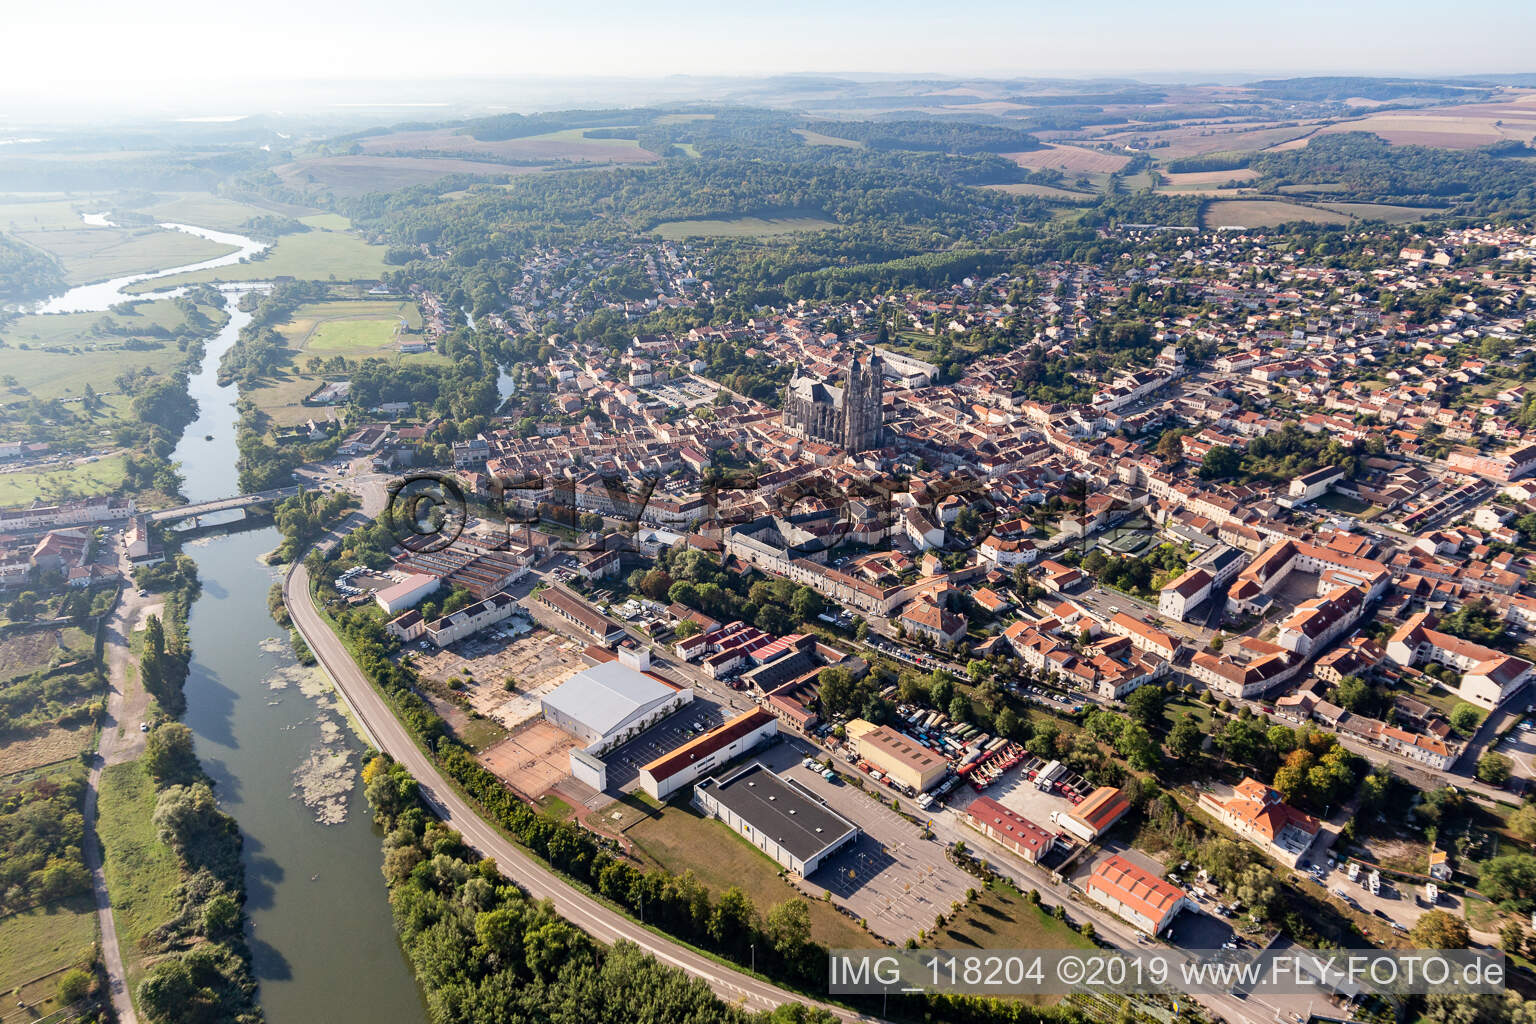 Saint-Nicolas-de-Port in the state Meurthe et Moselle, France